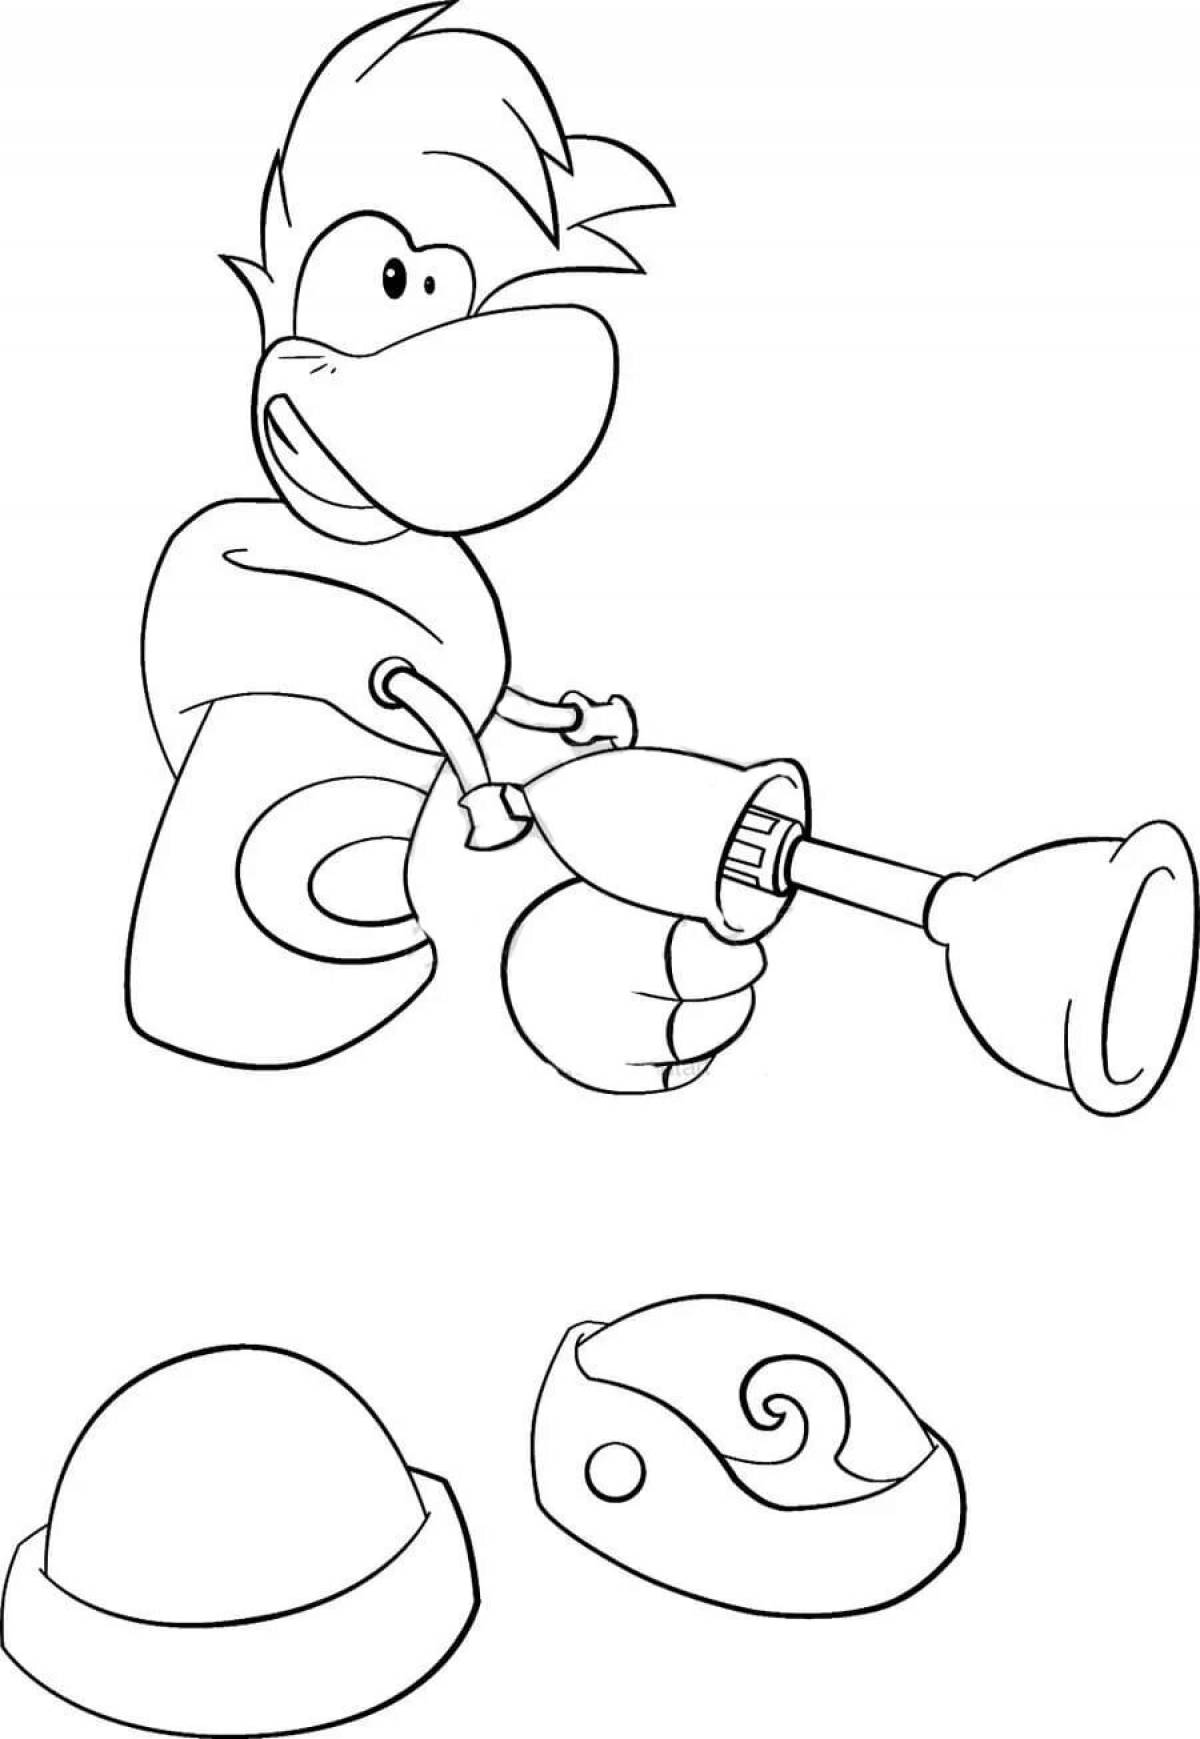 Rayman comic coloring page